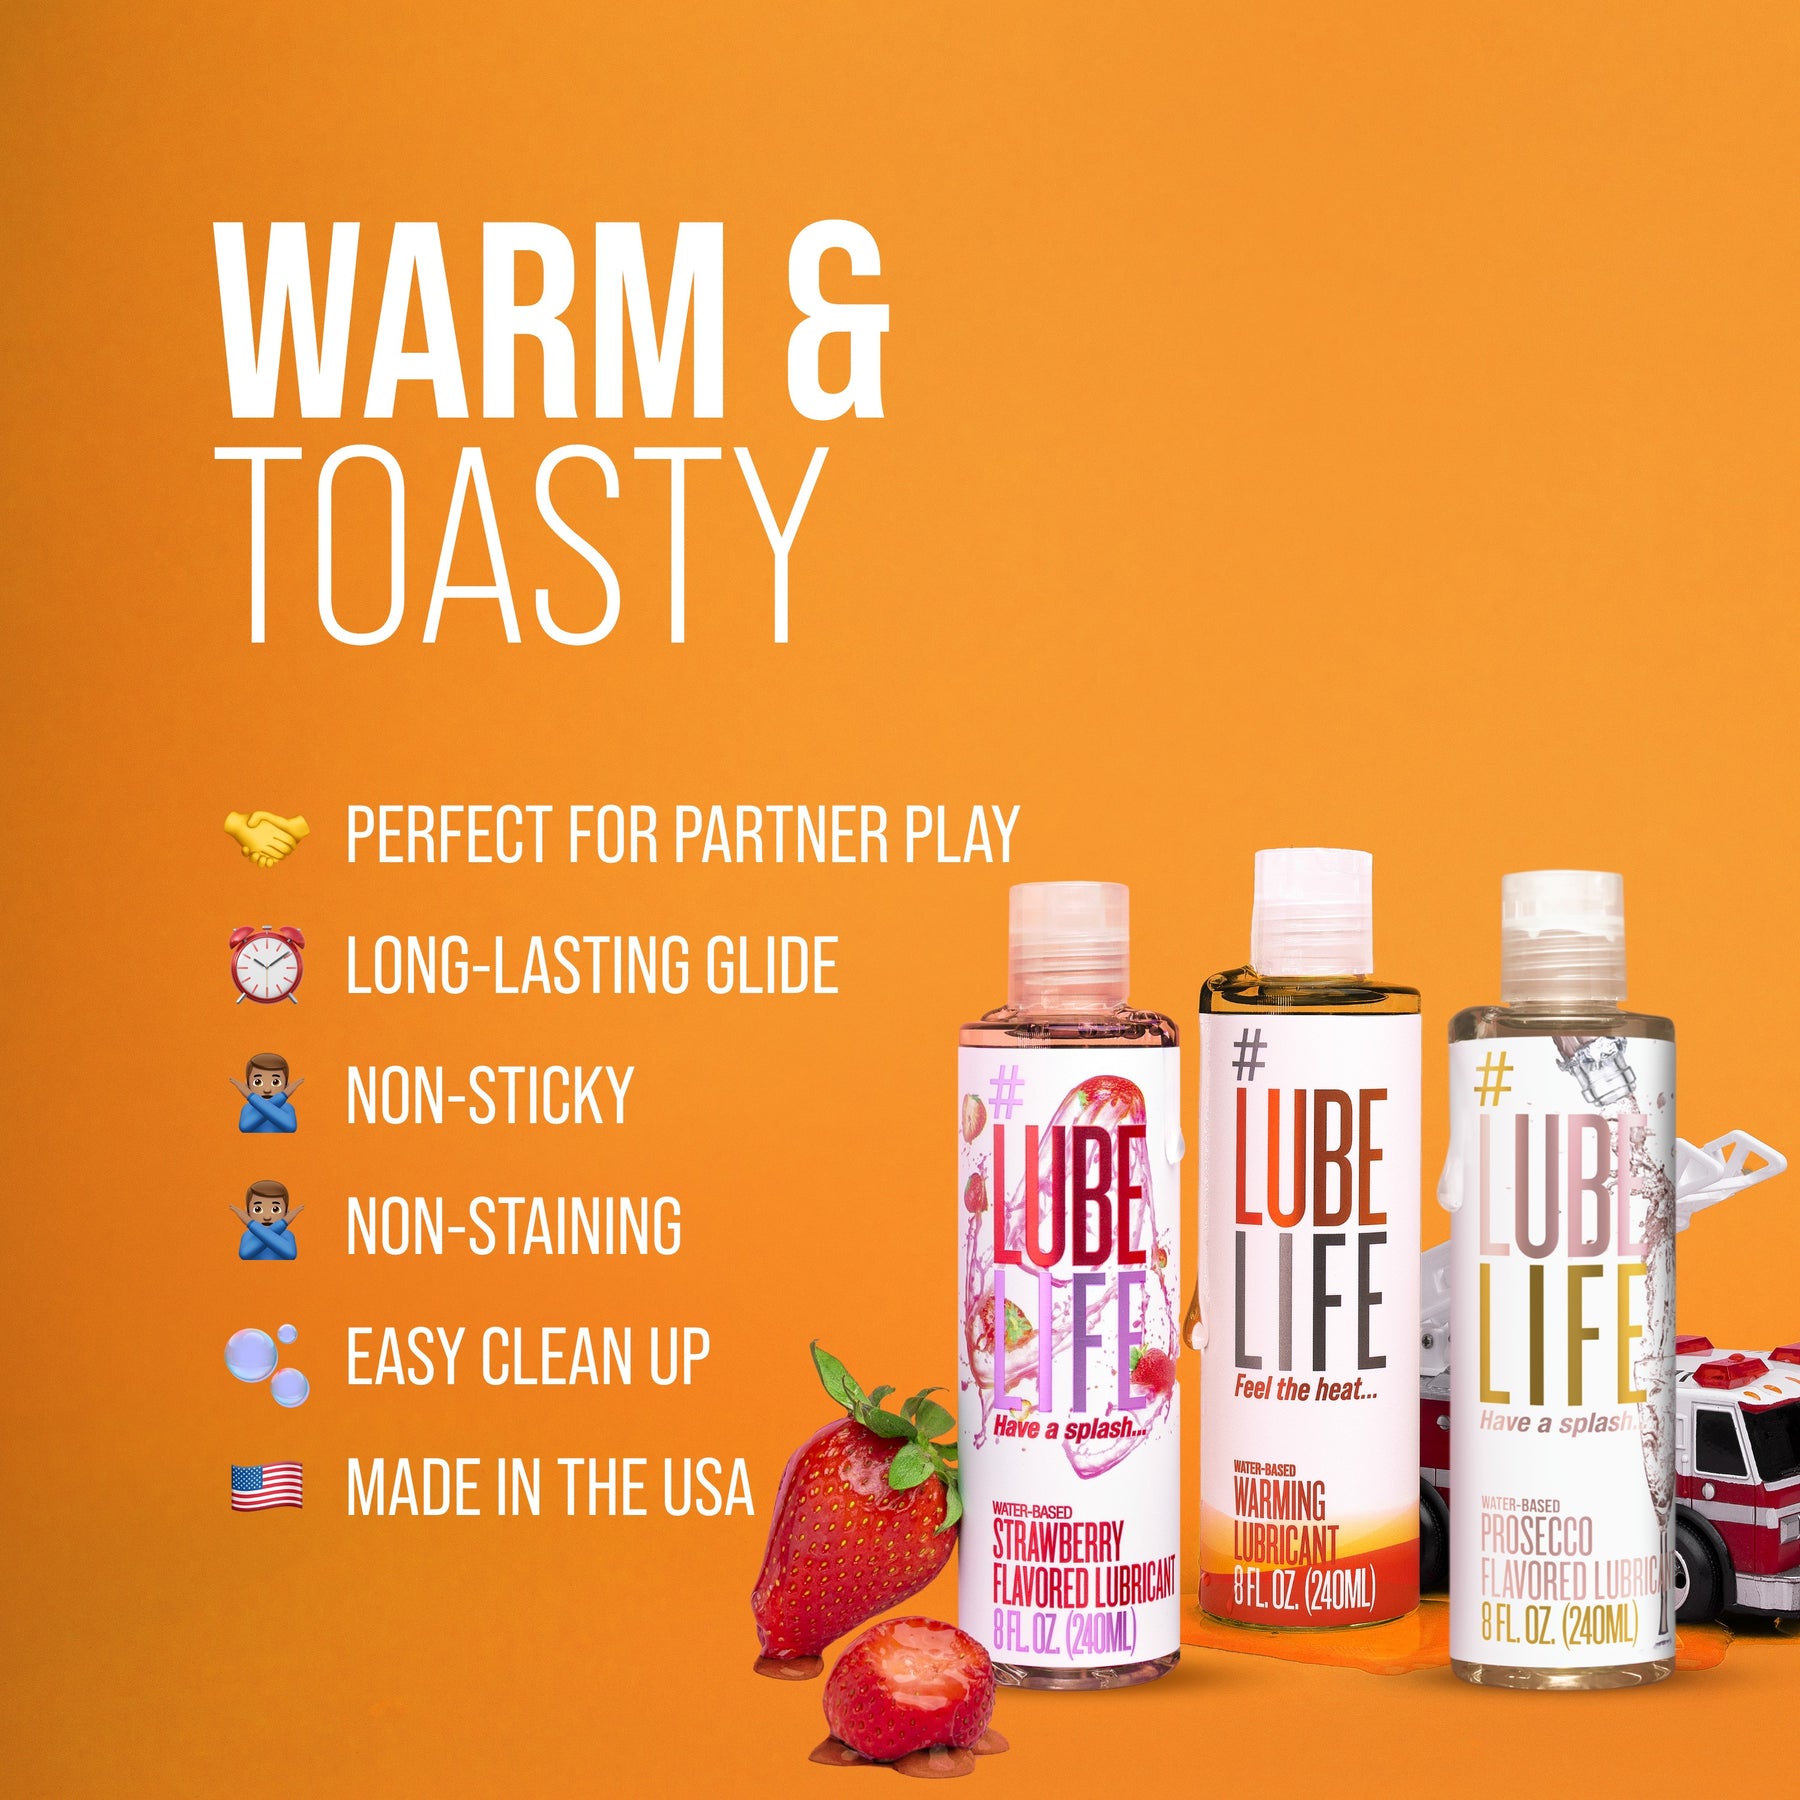 Warm & Toasty – #Lubelife